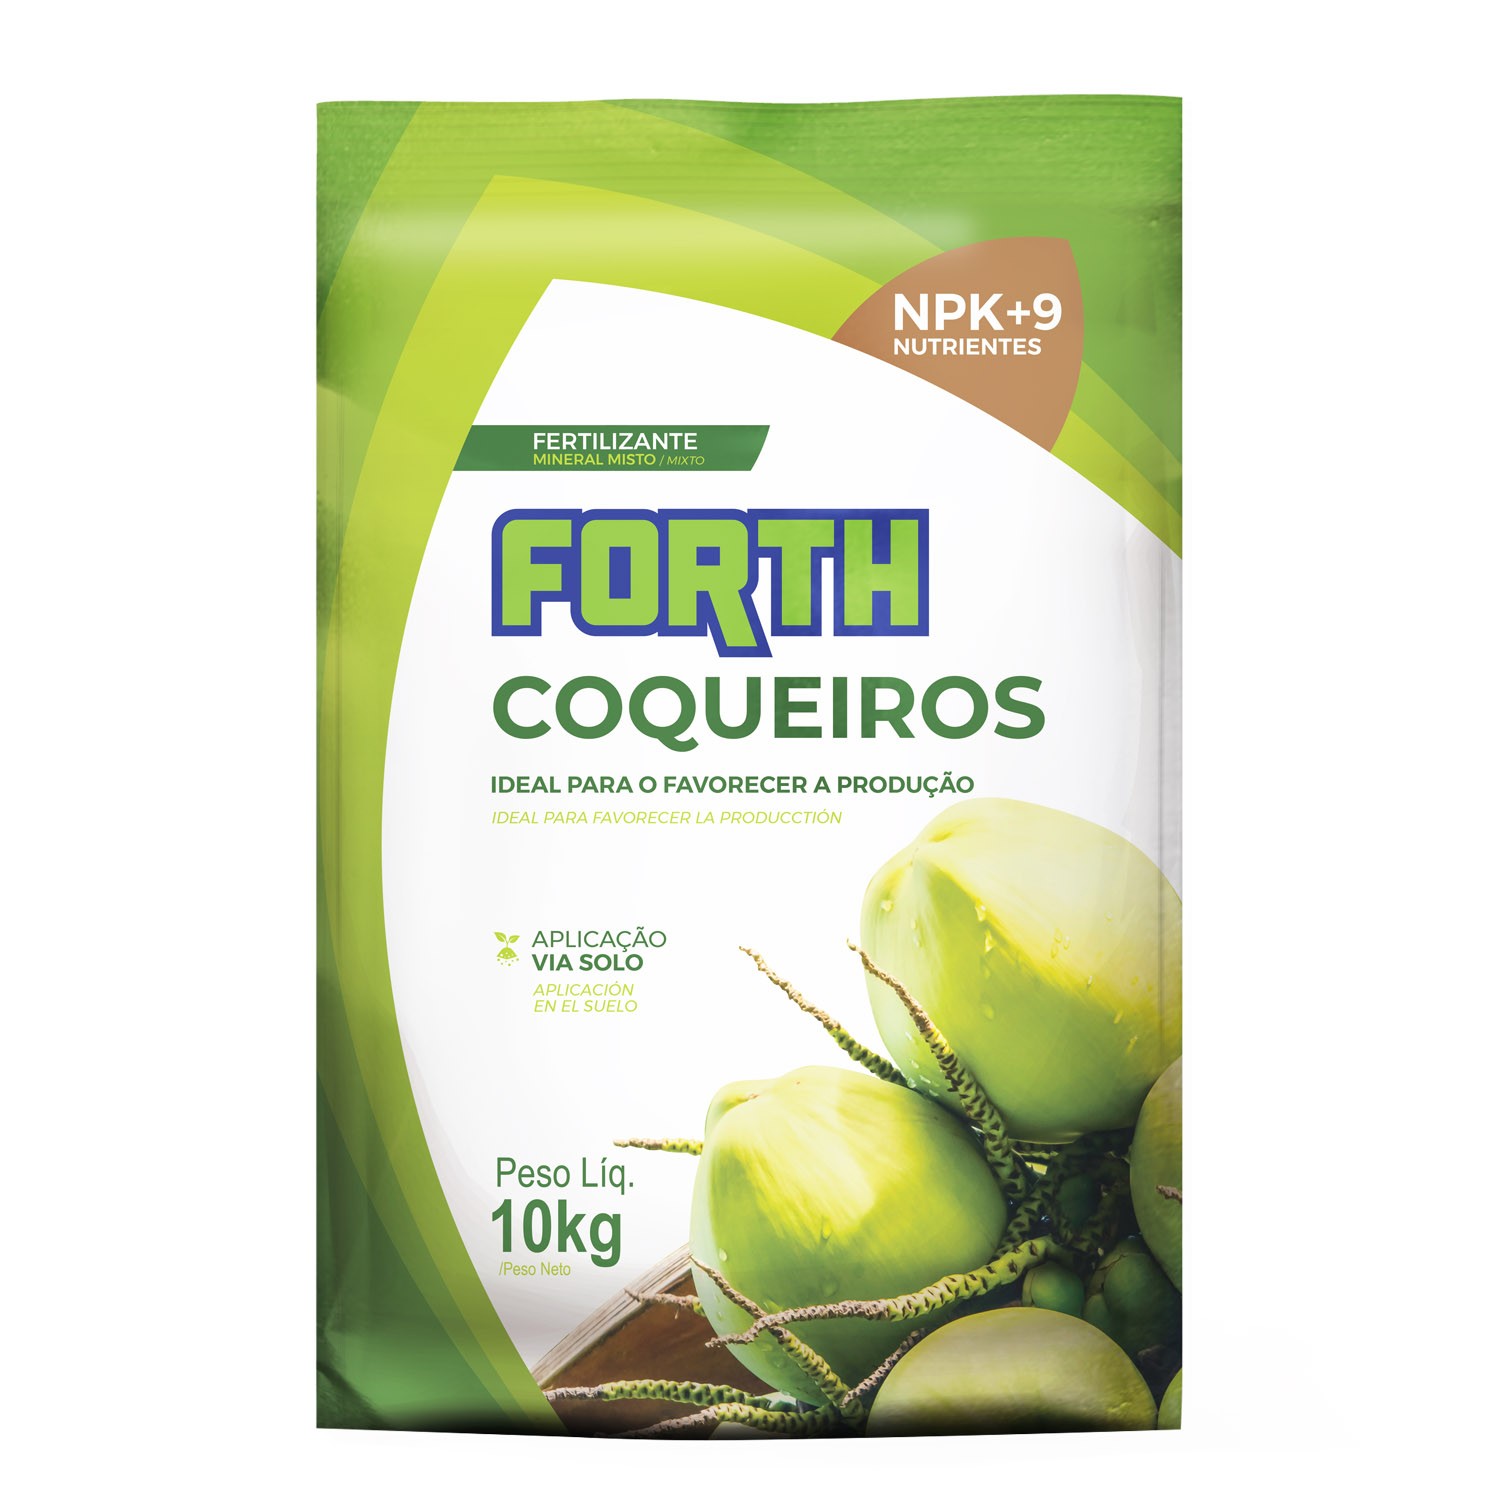 Fertilizante Forth Coqueiros 10kg - Foto 0